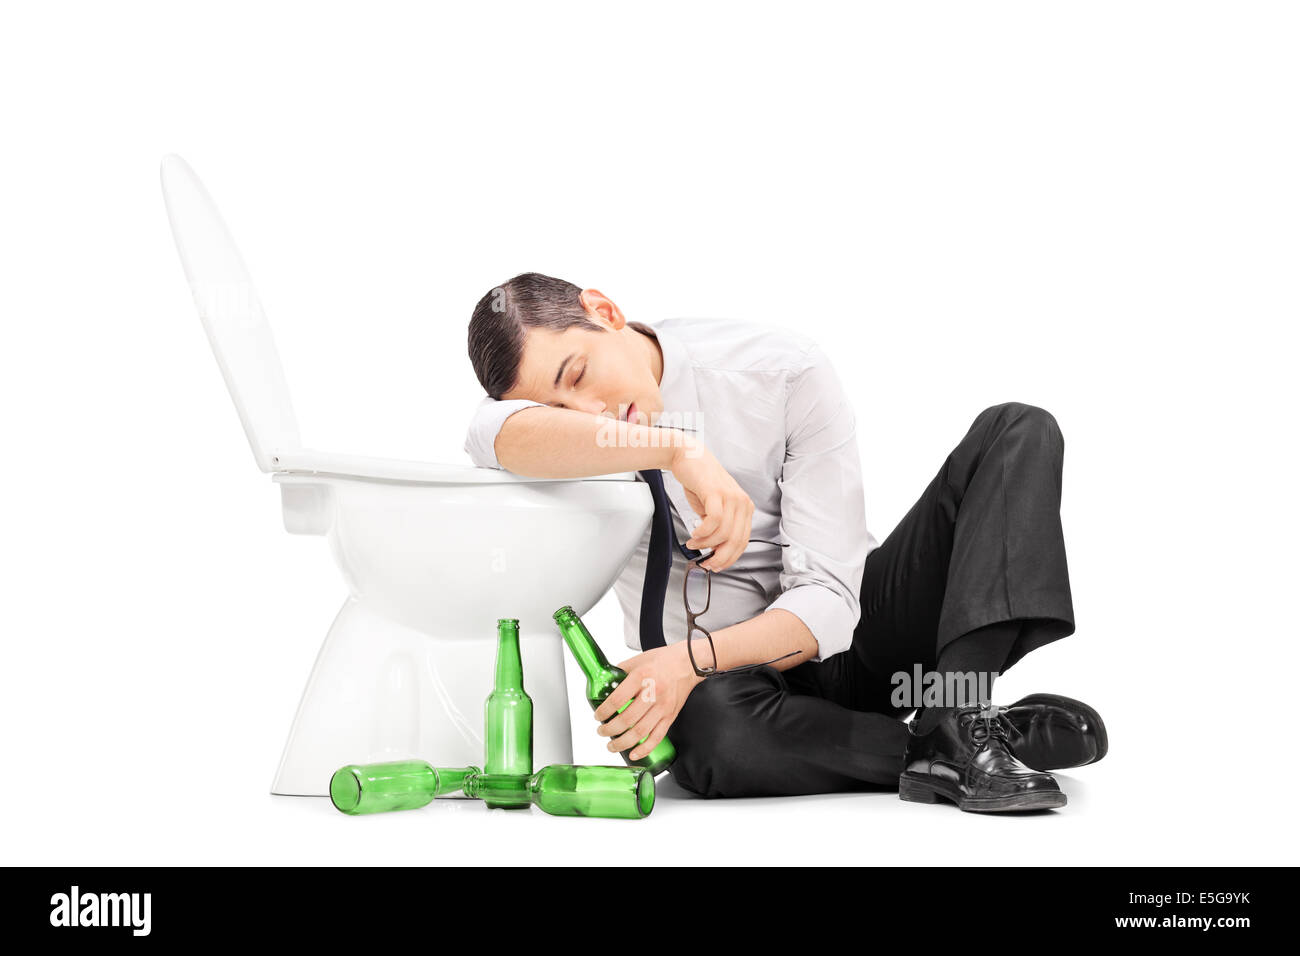 Male alcoholic sleeping on a toilet Stock Photo